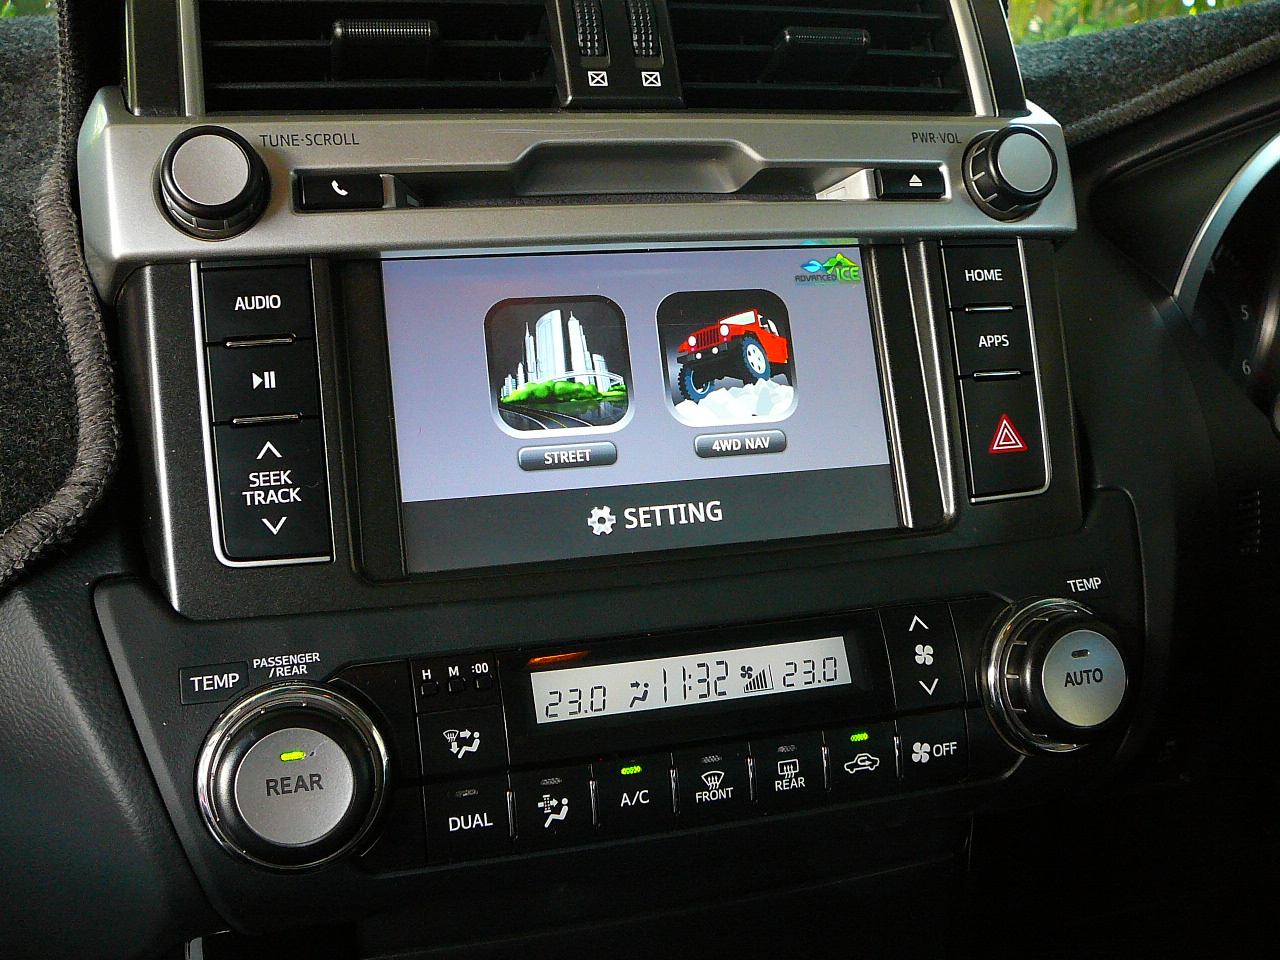 Toyota Prado 150 Series, Integrated GPS Navigation with HEMA Off-Road Maps